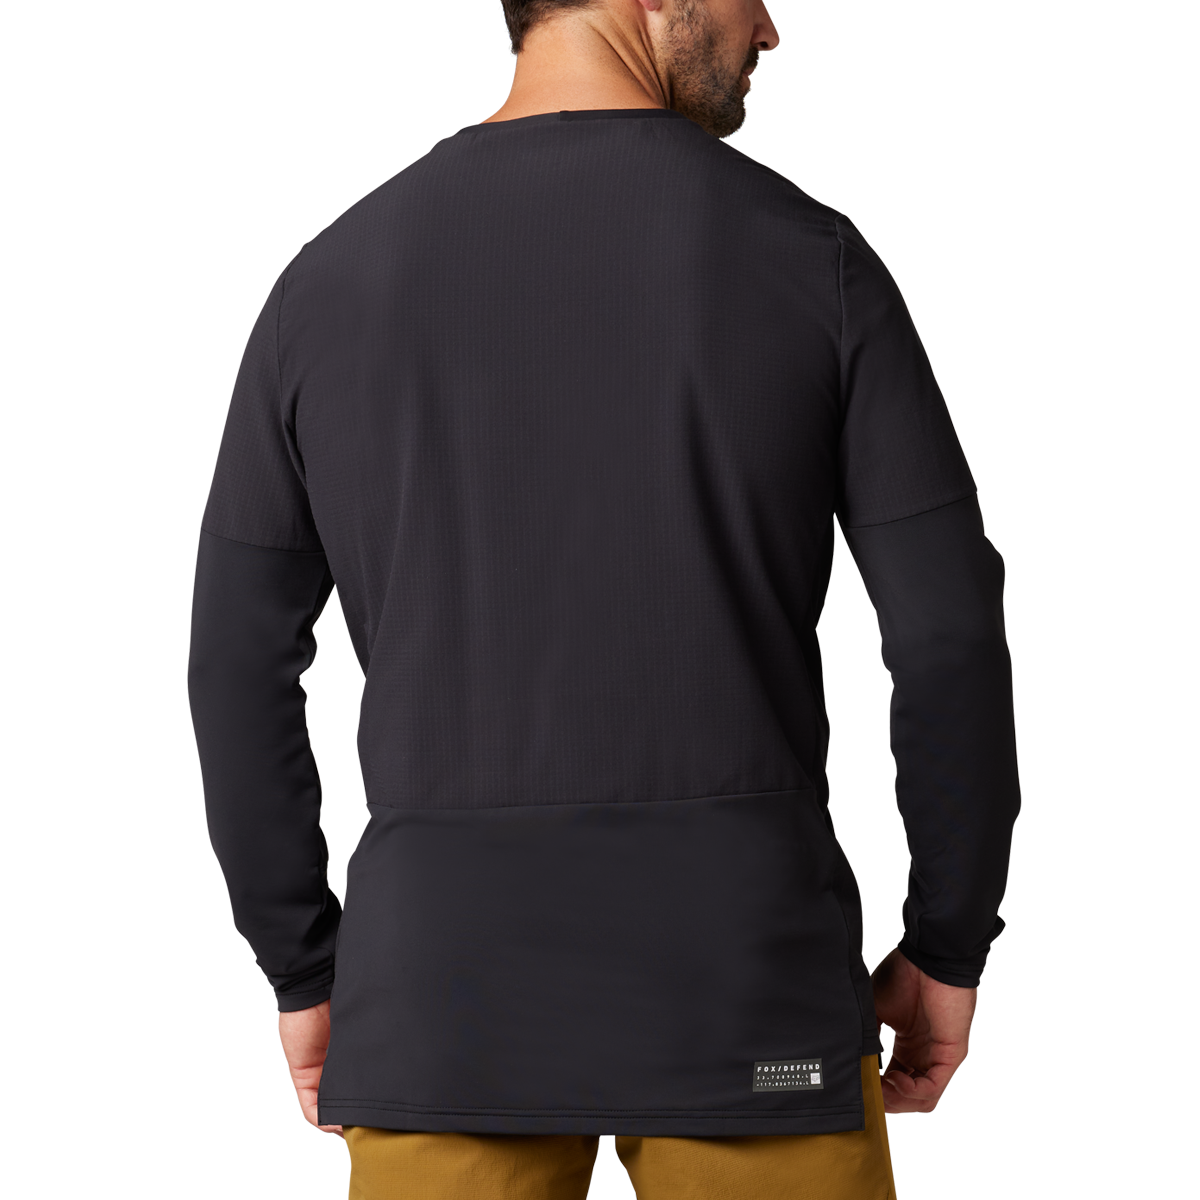 Men's Short Sleeve Compression Shirt with Zipper – DFND